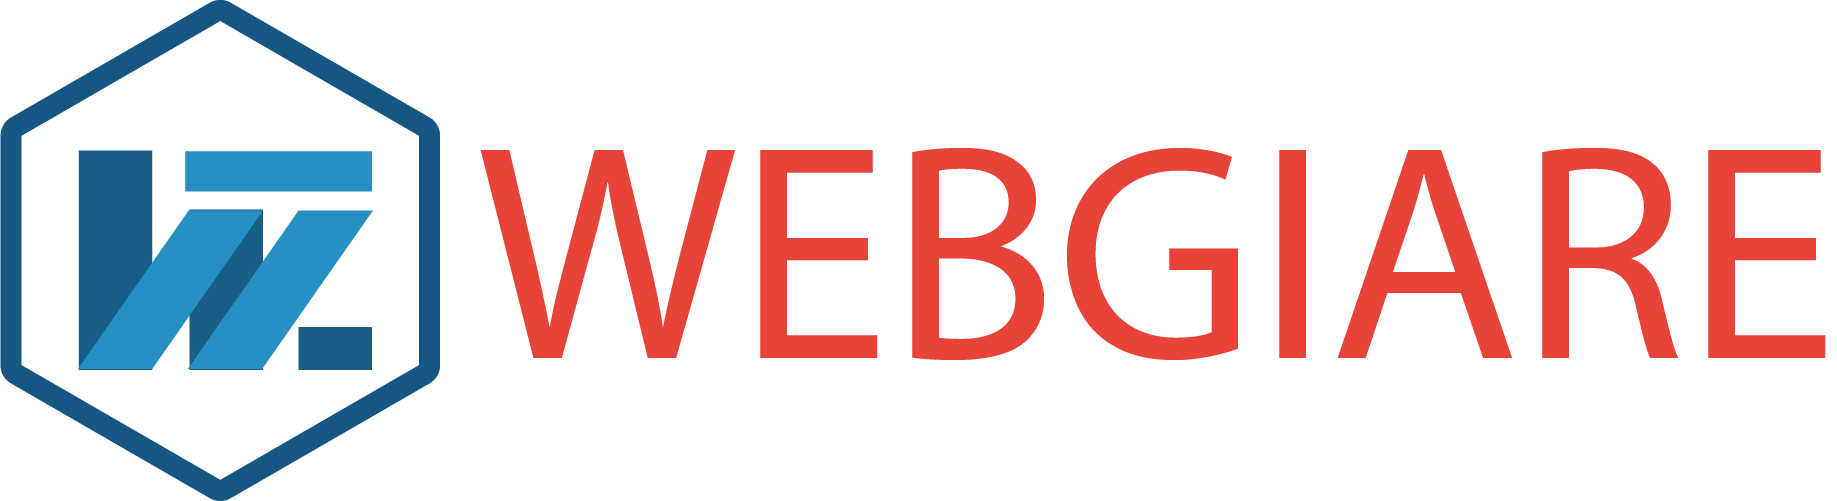 Logowebgiare 1